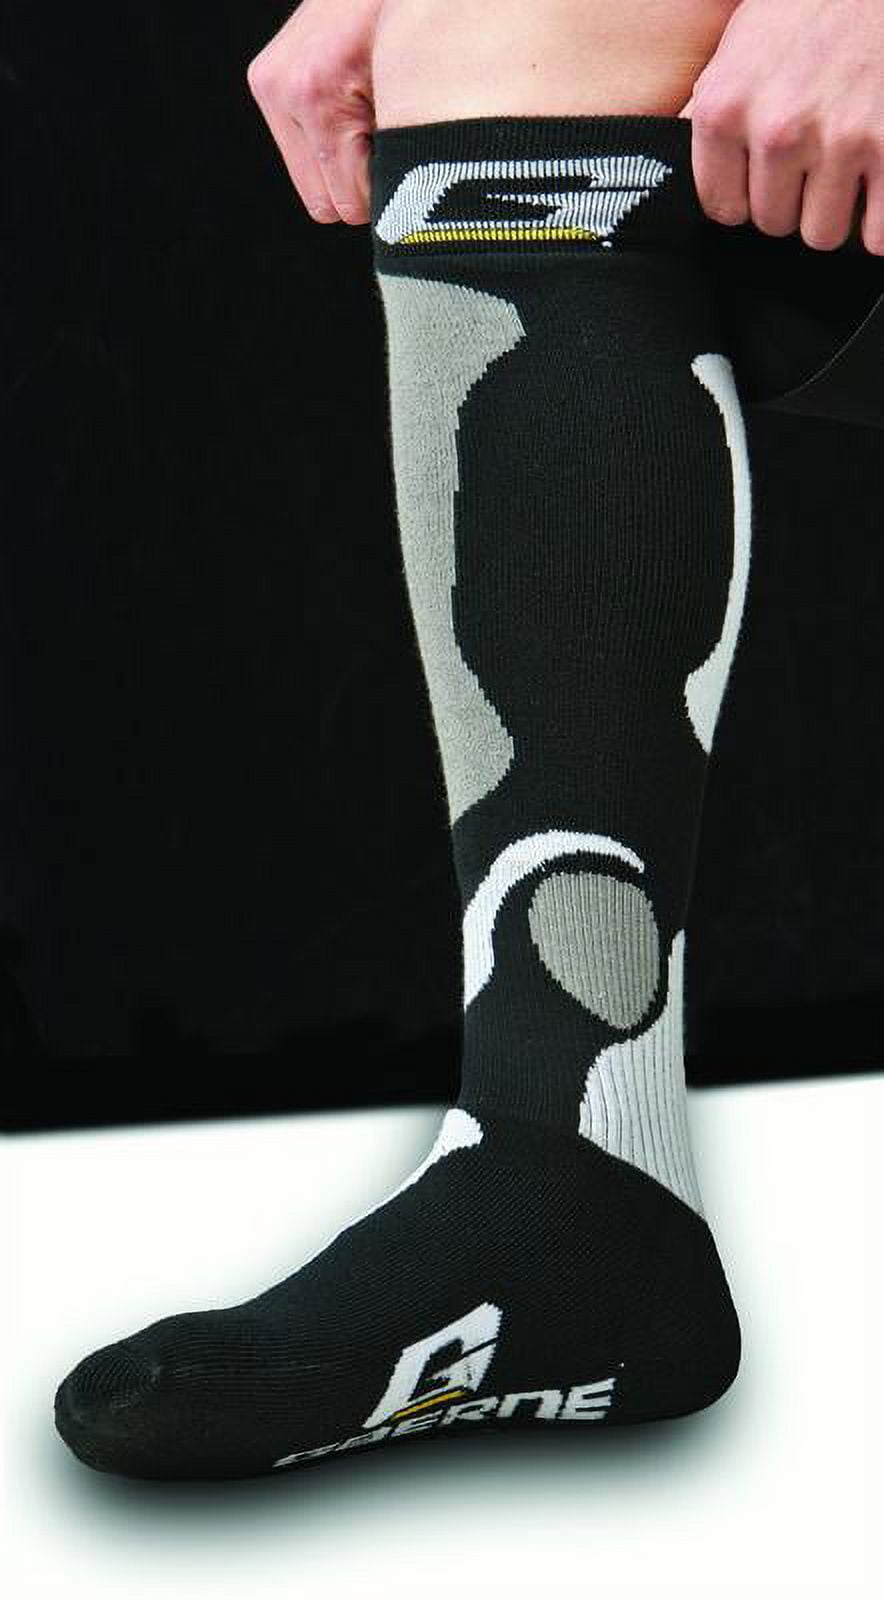 Gaerne Short Socks Black/Gray 7-9 USA 